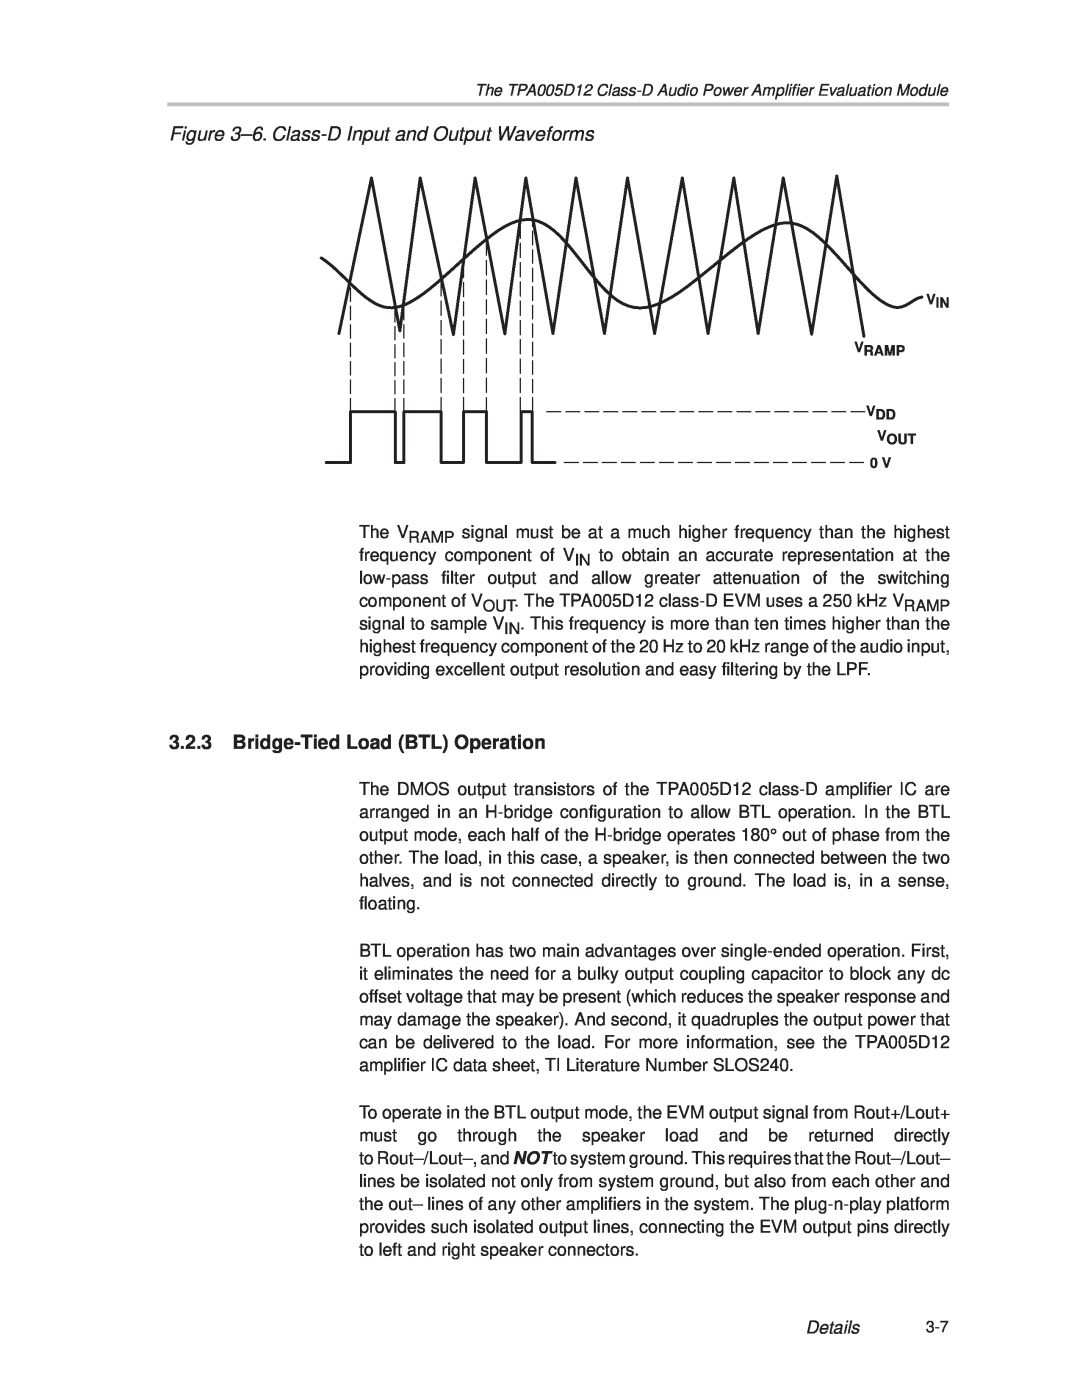 Texas Instruments TPA005D12 manual 3.2.3Bridge-TiedLoad BTL Operation, ±6. Class-DInput and Output Waveforms, Details 